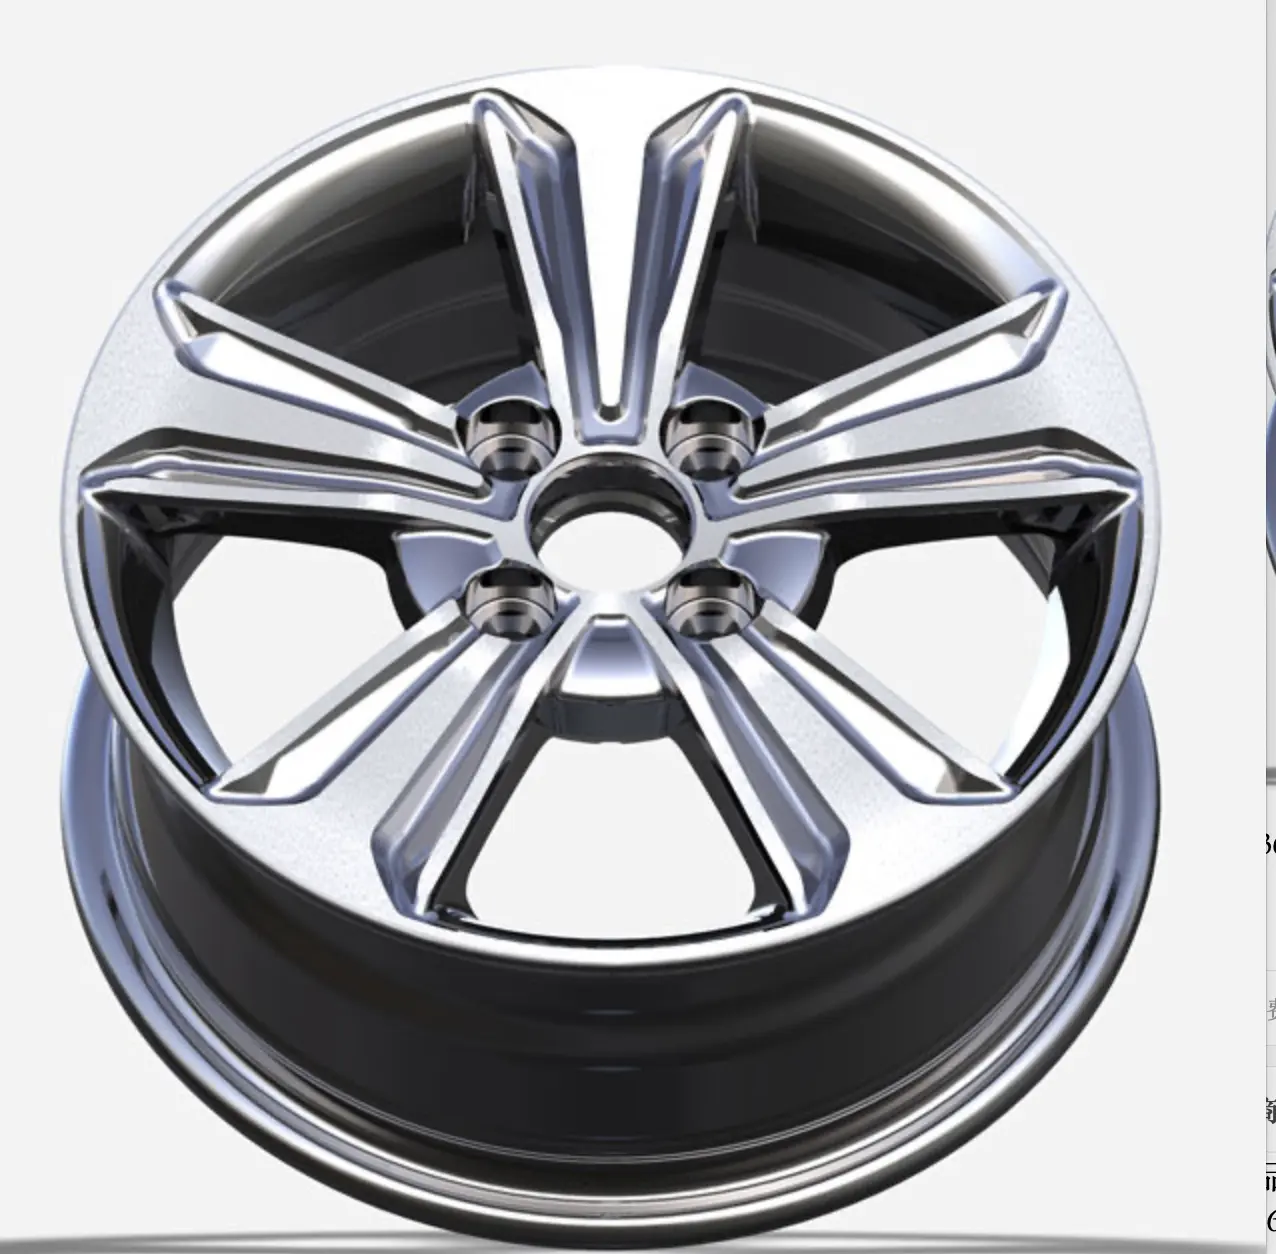 [For Hyundai] 14 15 16 Inch 4*100 Passenger Car Alloy Wheel Rims For Centennial Coupe Sonata NF Elantra Equus Santa Fe Tucson Jerry Huang